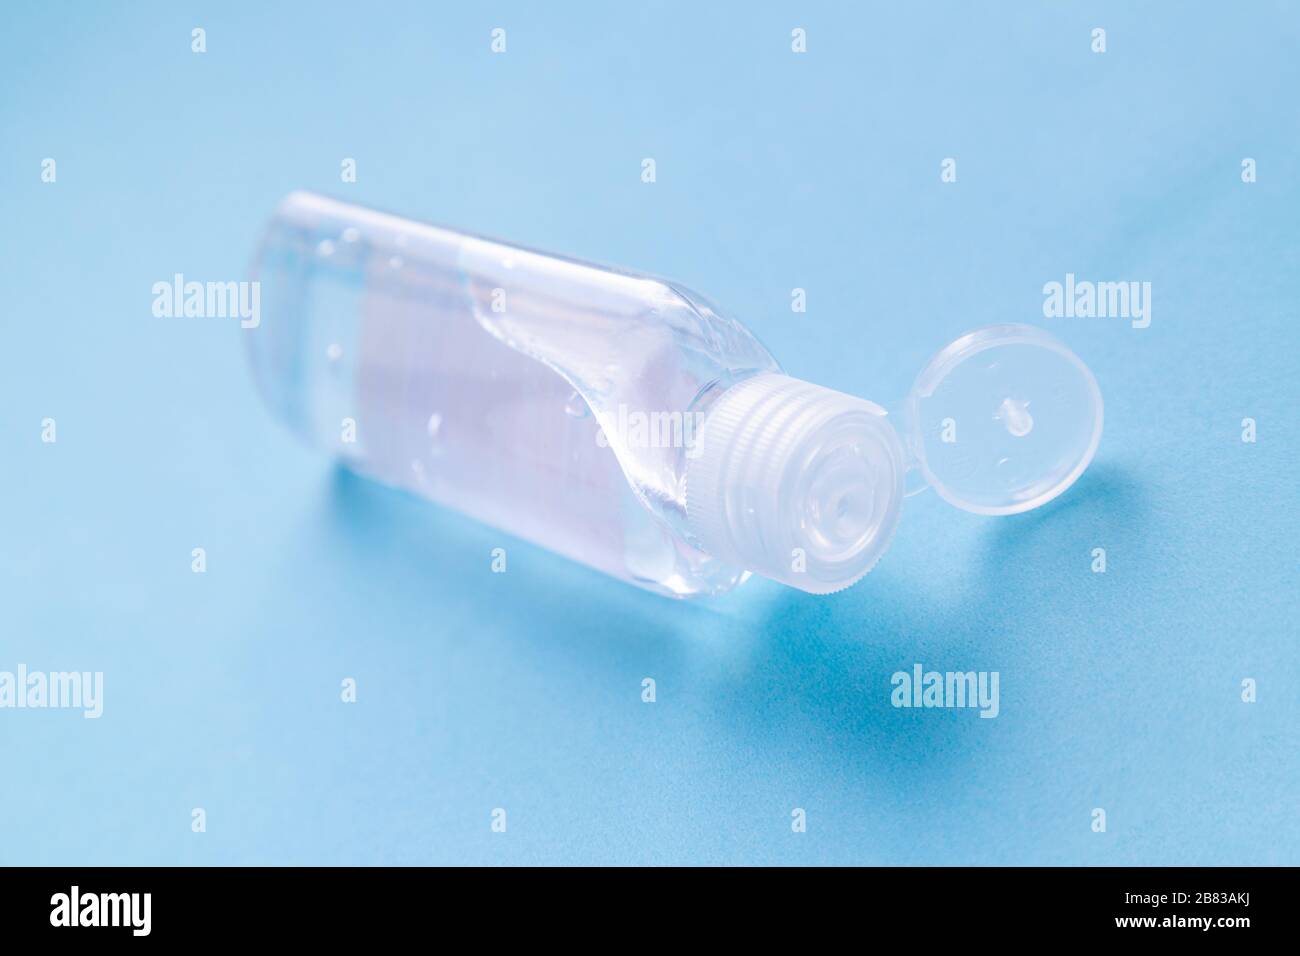 Una botella transparente de desinfectante para manos a base de alcohol Foto de stock